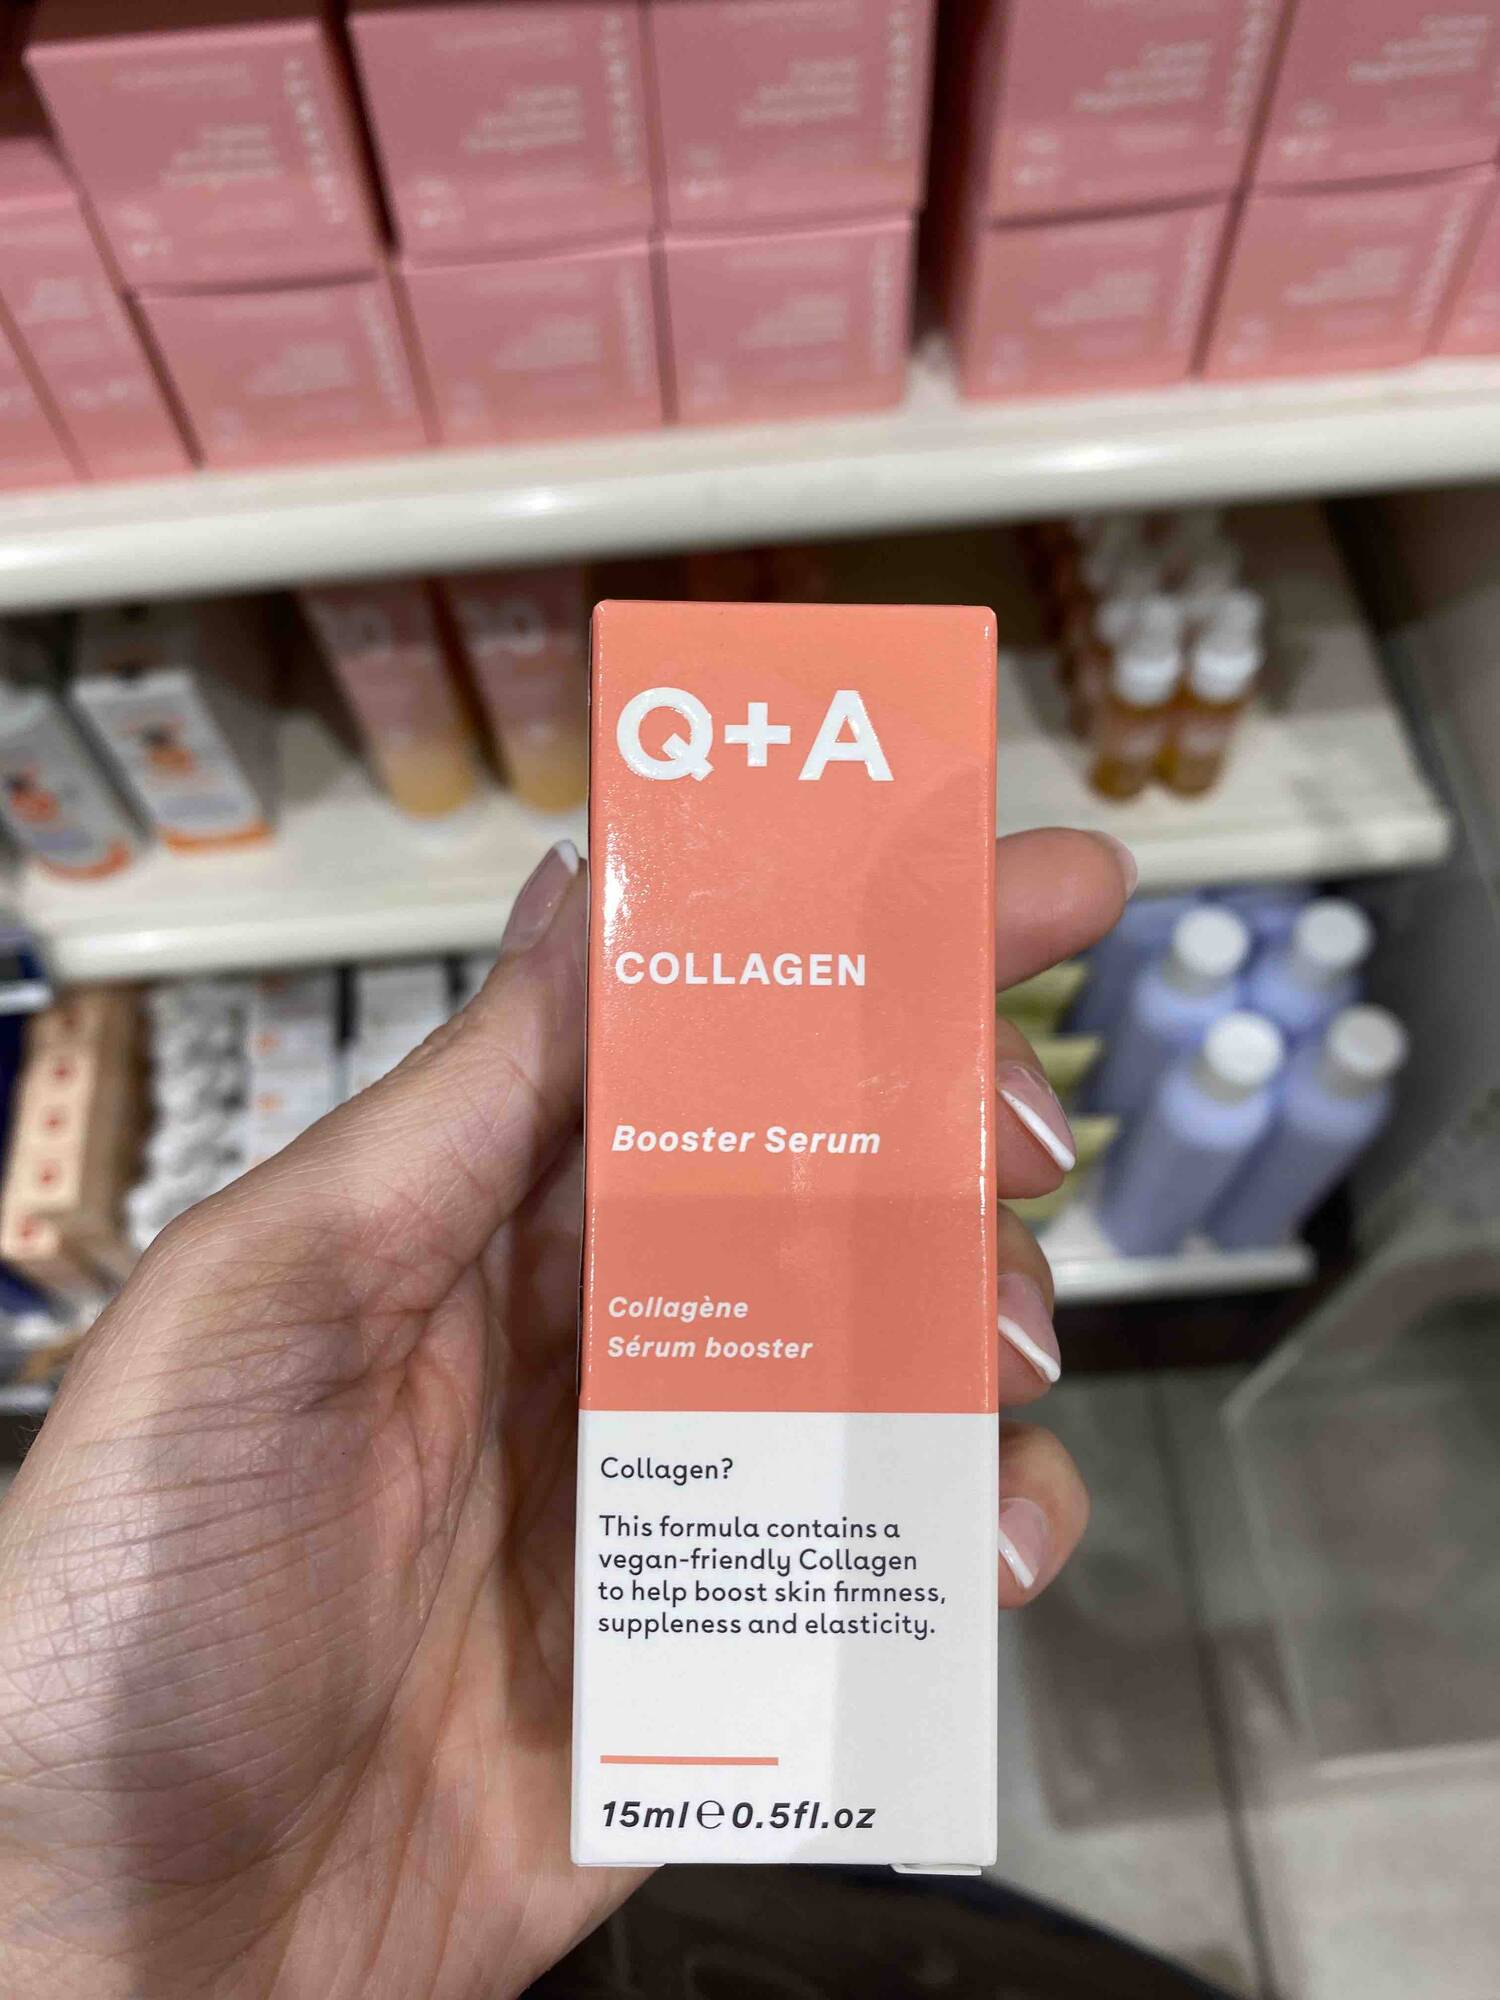 Q+A - Collagen - Booster serum